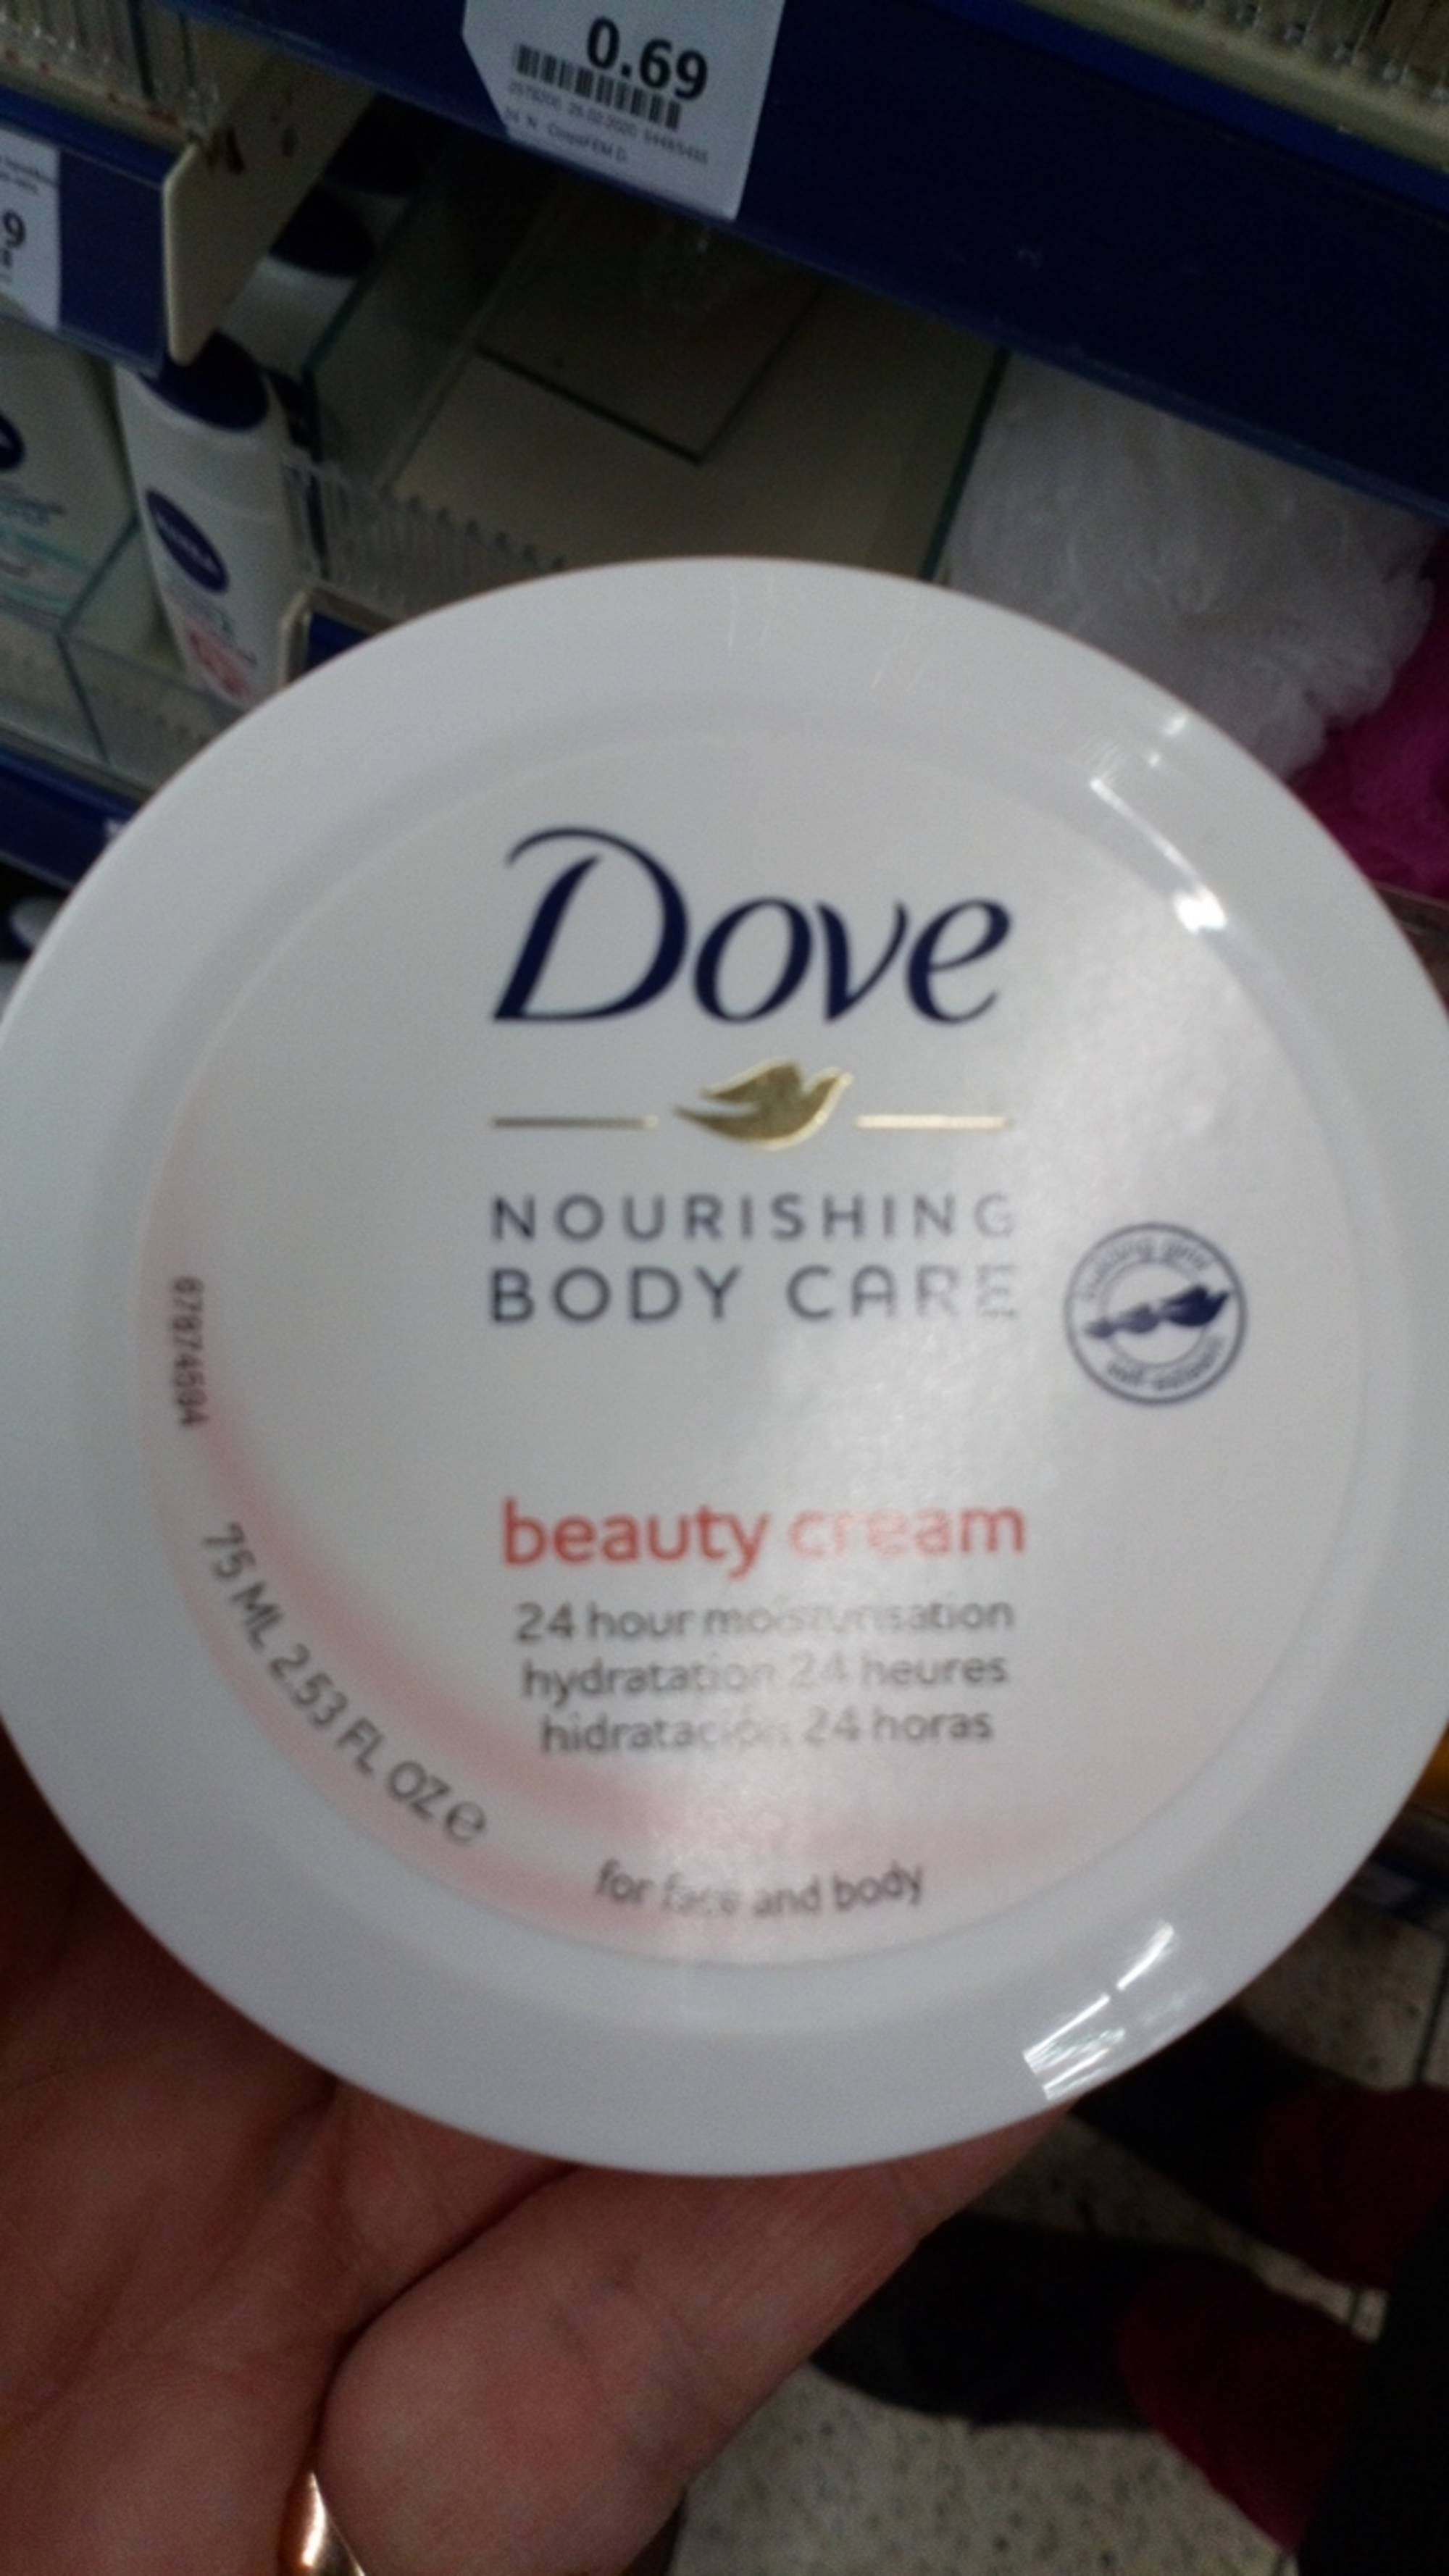 DOVE - Nourishing body care - Beauty cream